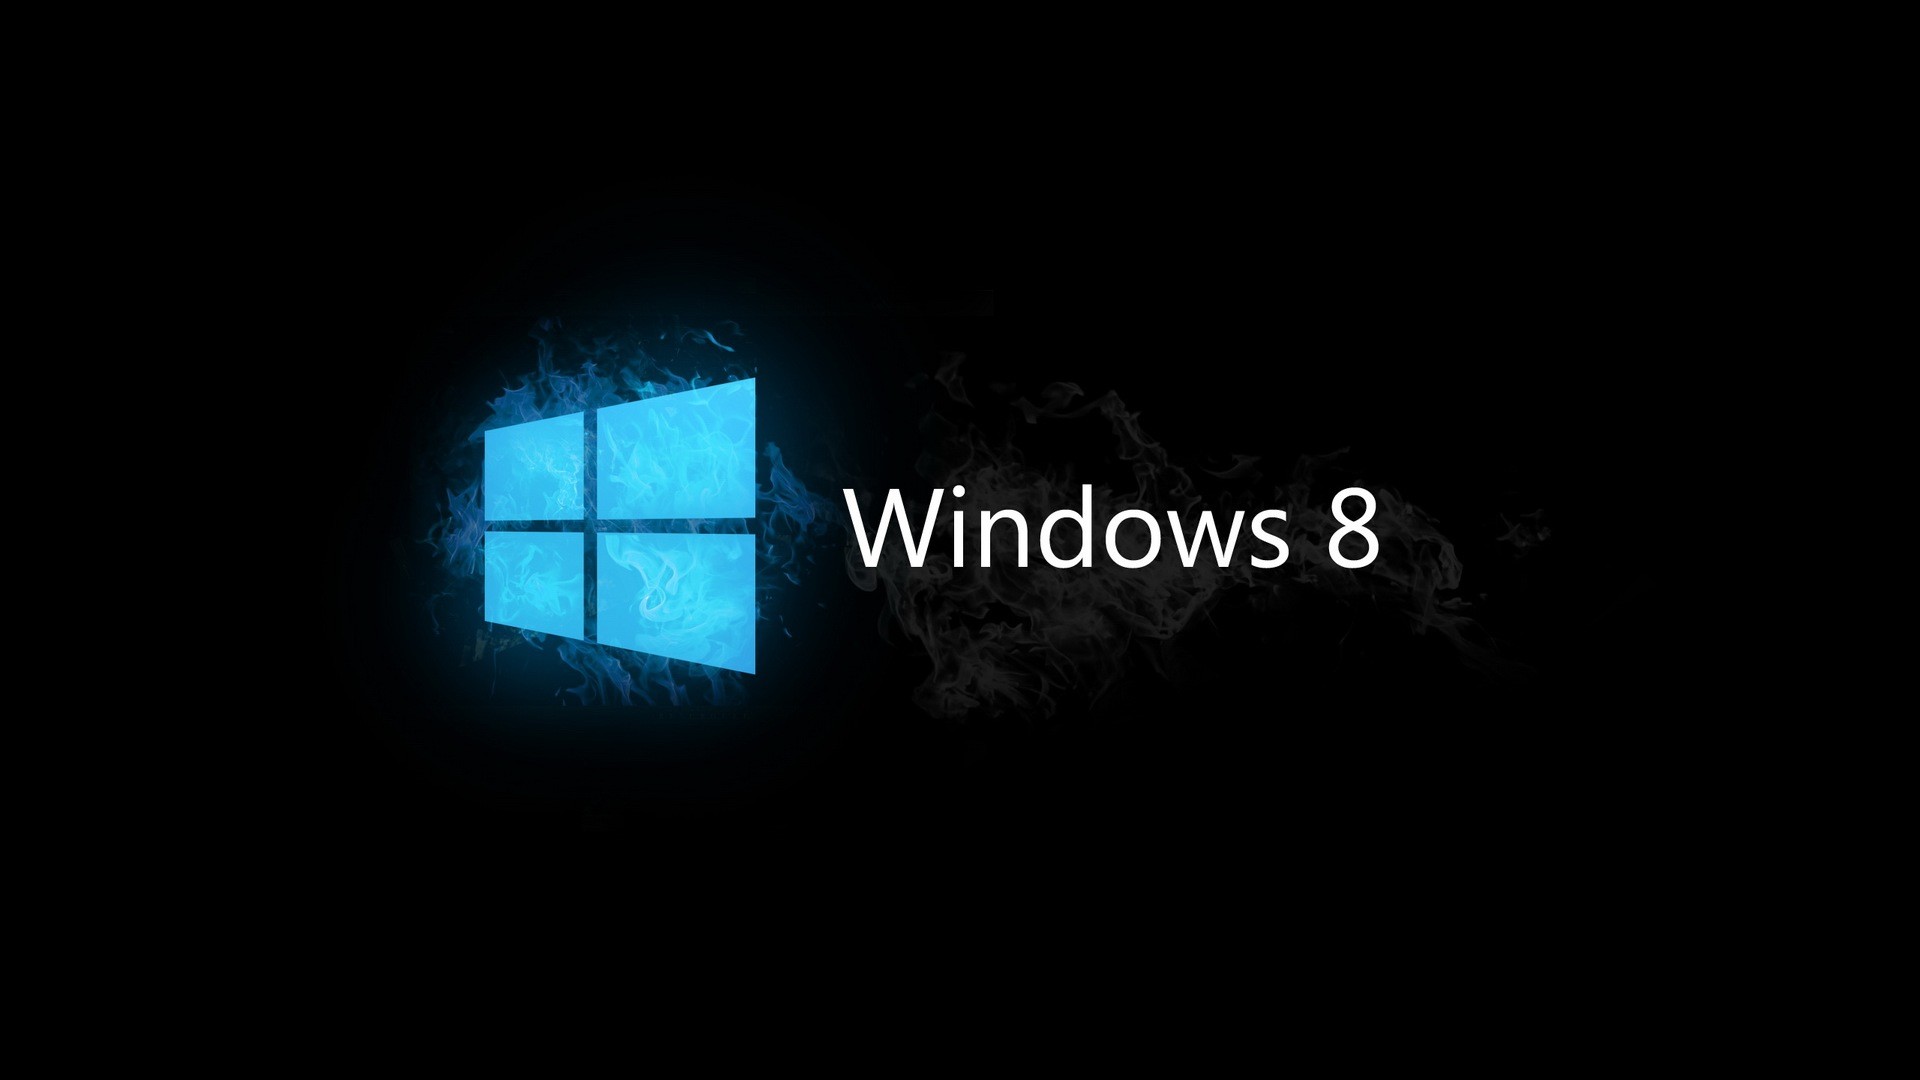 microsoft windows 8 desktop